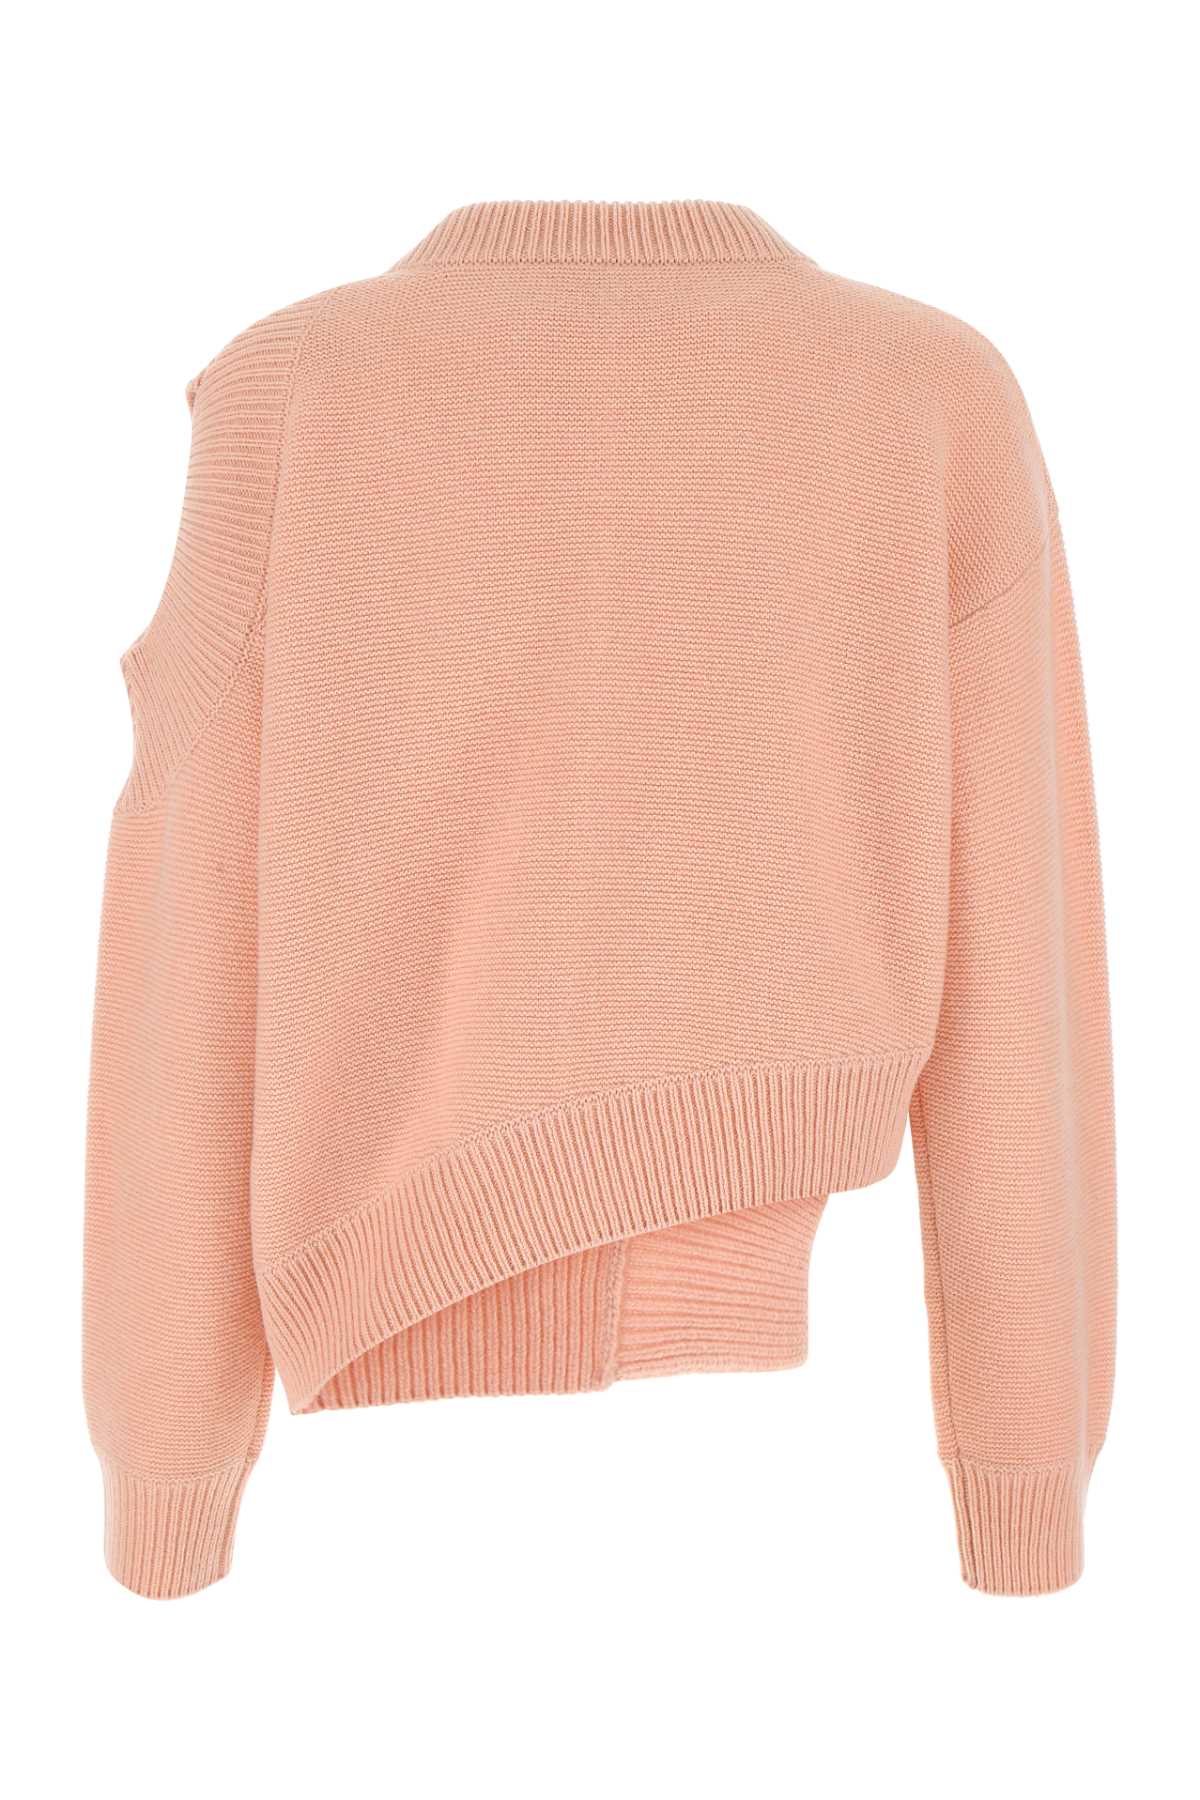 Stella Mccartney Pink Cashmere Blend Sweater In 5554